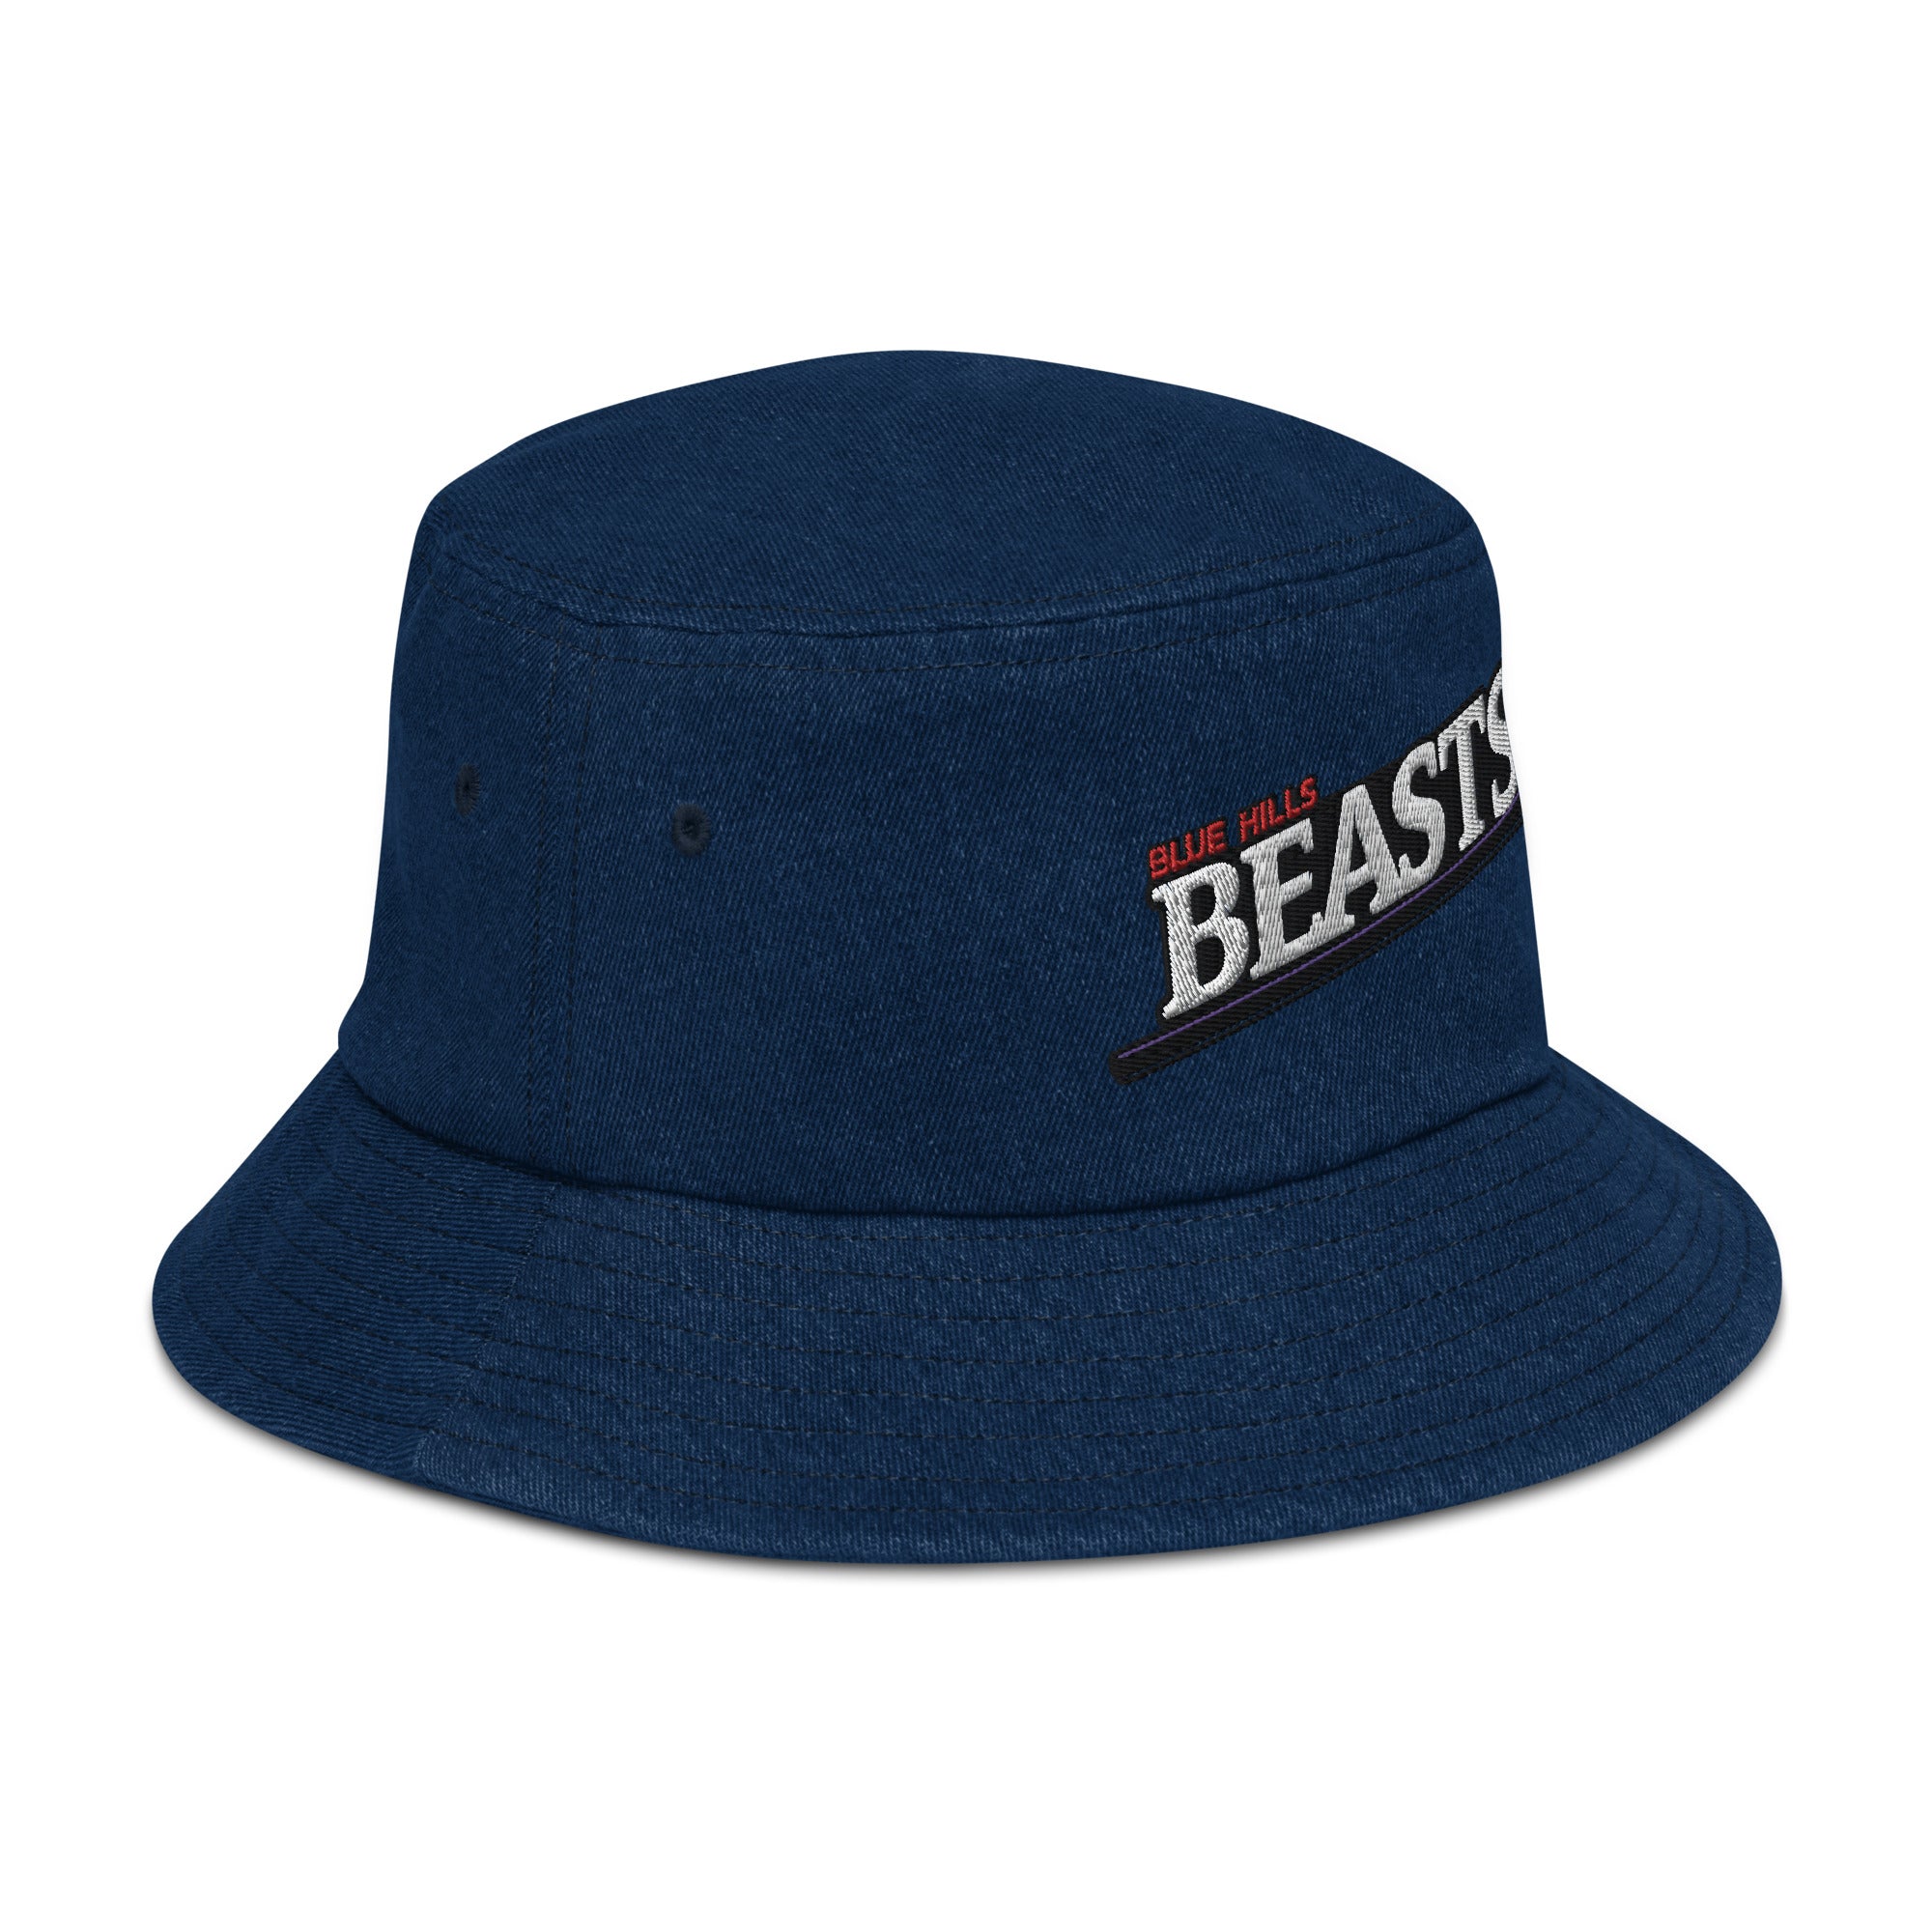 Blue Hills Beasts Denim bucket hat